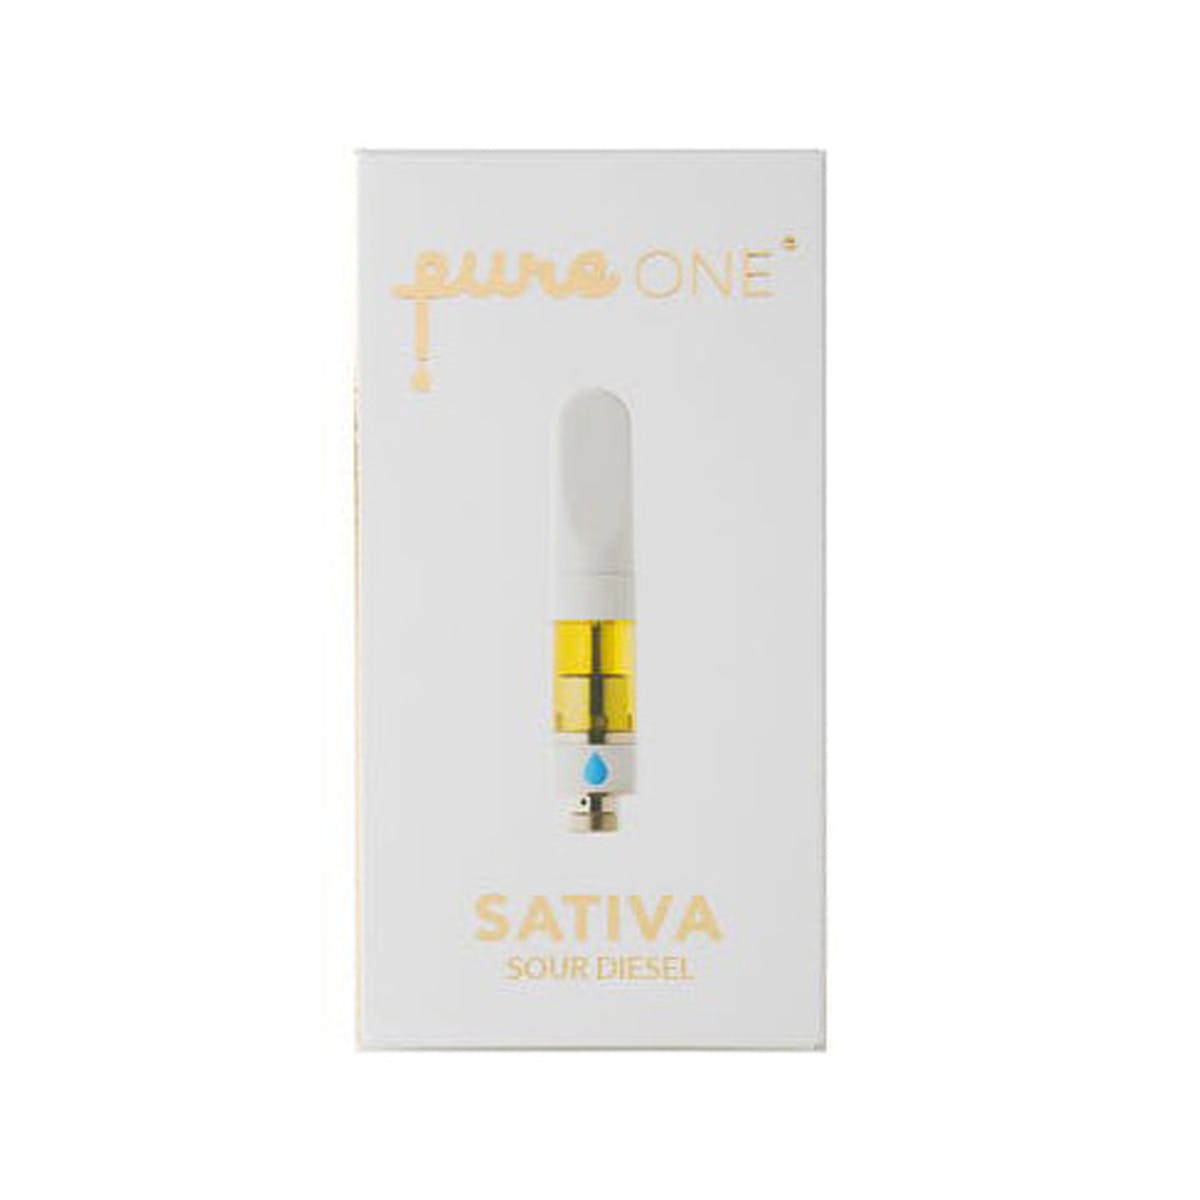 marijuana-dispensaries-safe-accessible-solutions-in-sacramento-sativa-pureone-co2-cartridge-sour-diesel